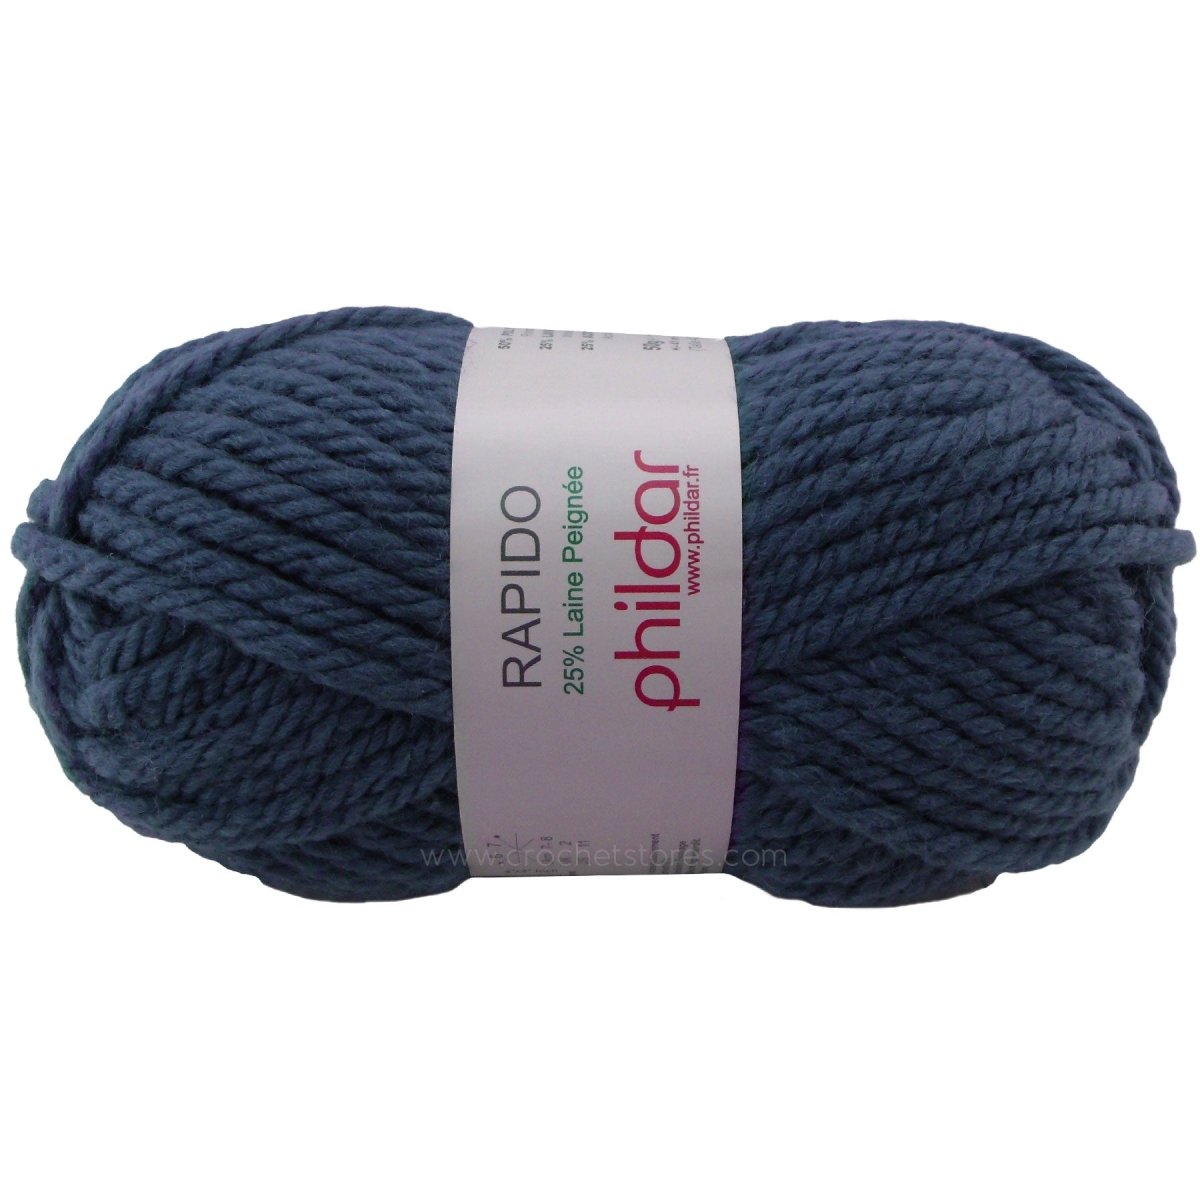 RAPIDO - Crochetstores500981-193307673813331